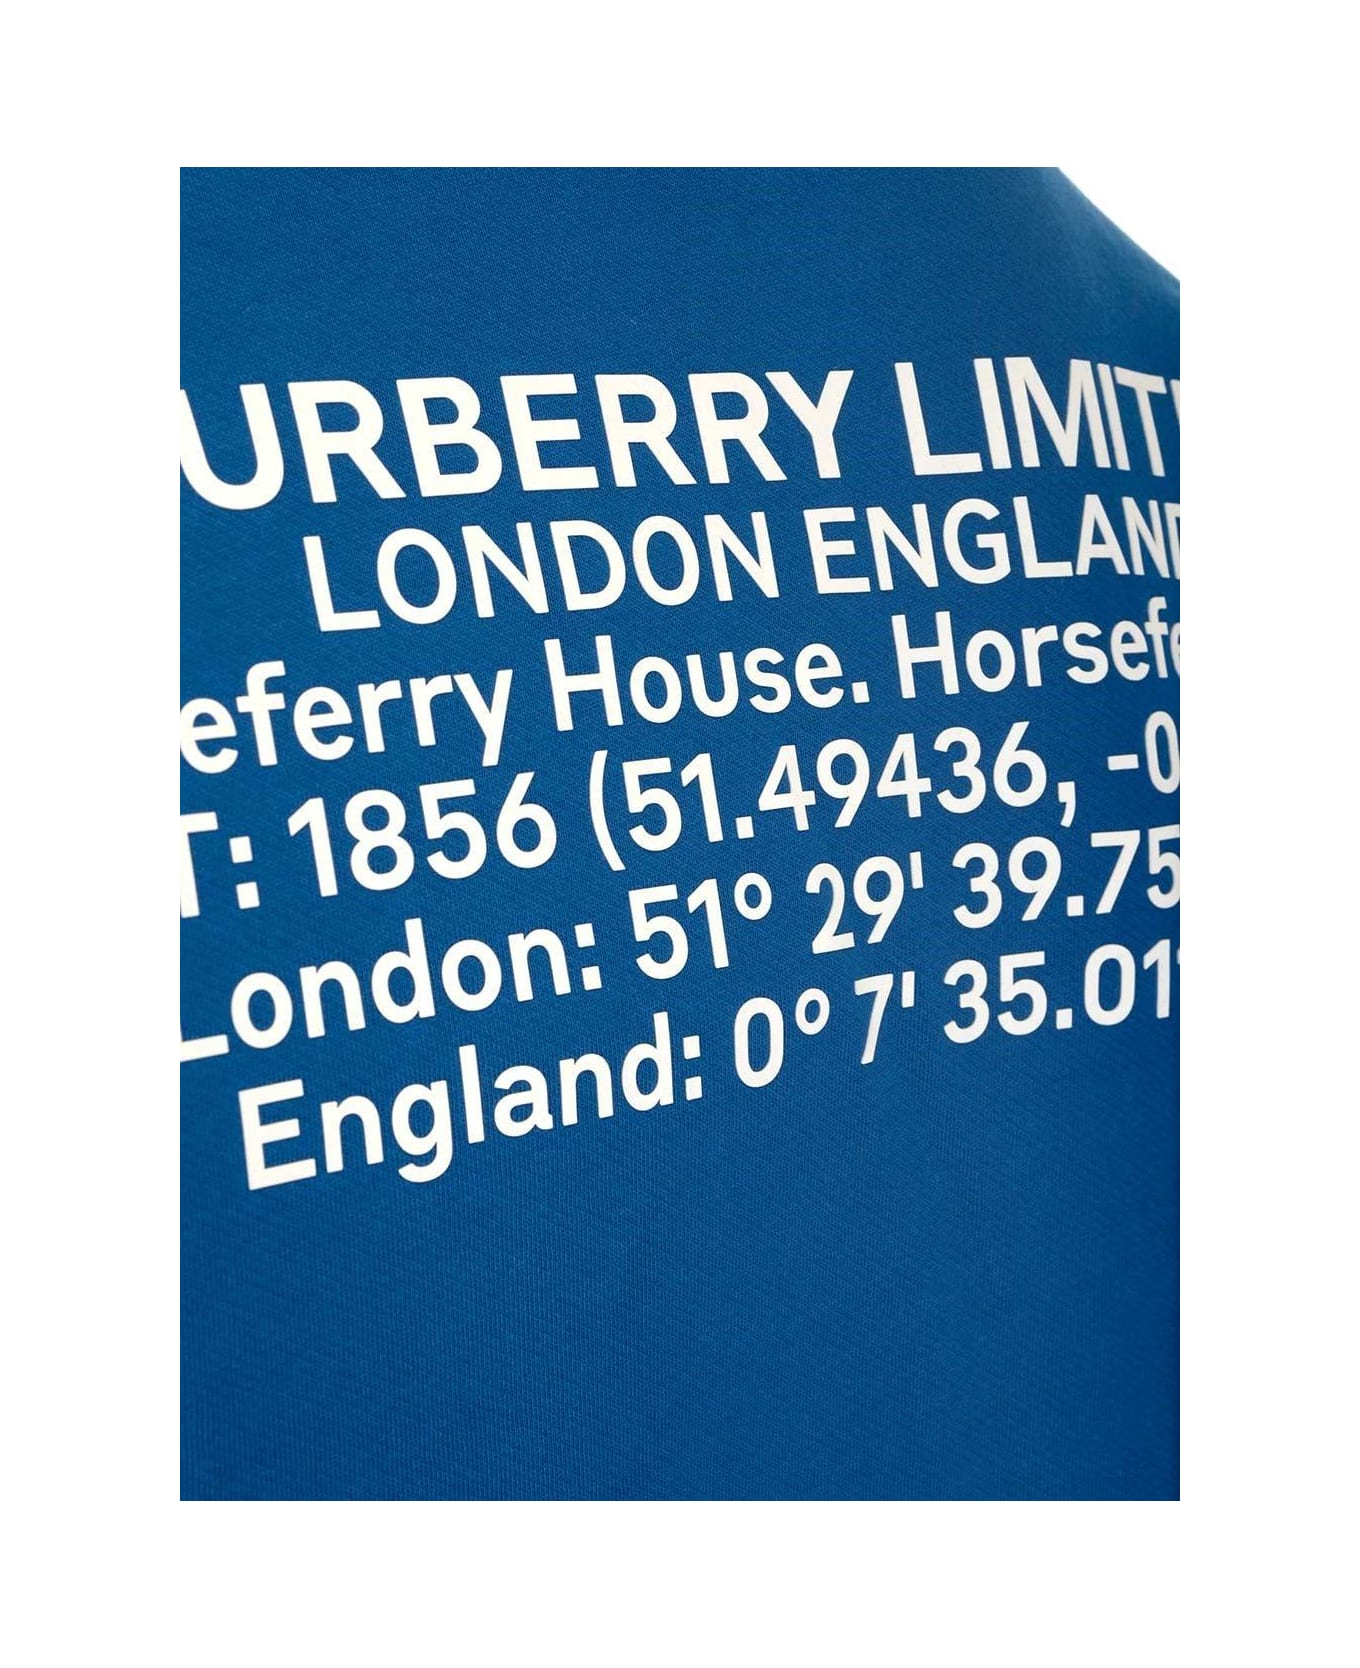 Burberry Location-printed Crewneck Sweatshirt - Blue ニットウェア